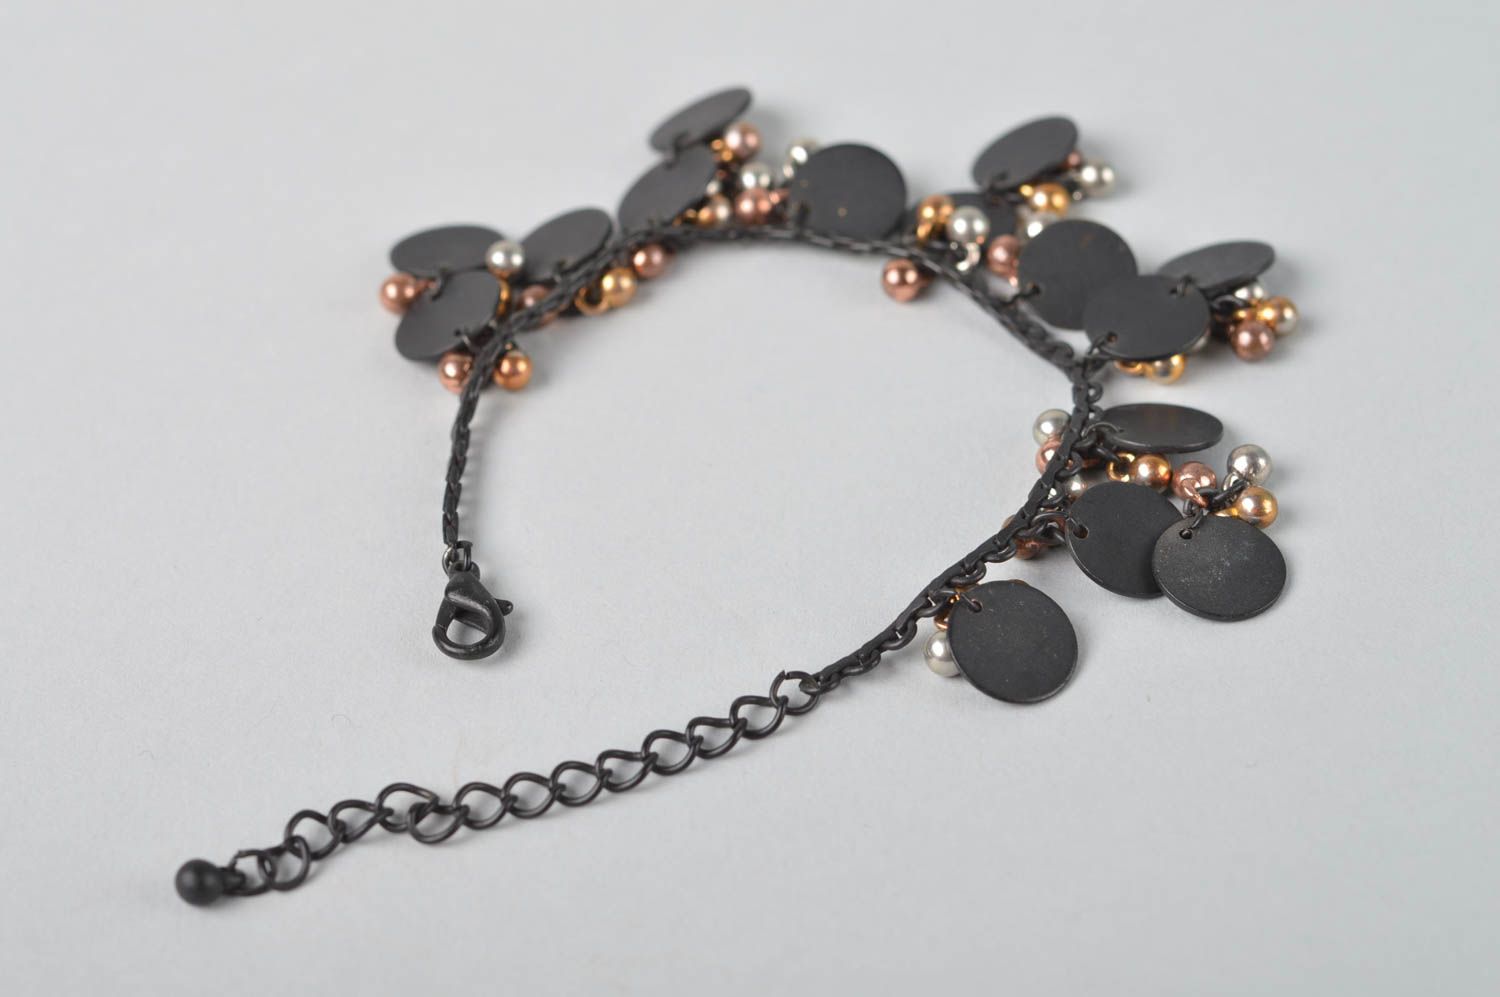 Handmade jewelry chain bracelet charm bracelet designer accessories gift ideas photo 5